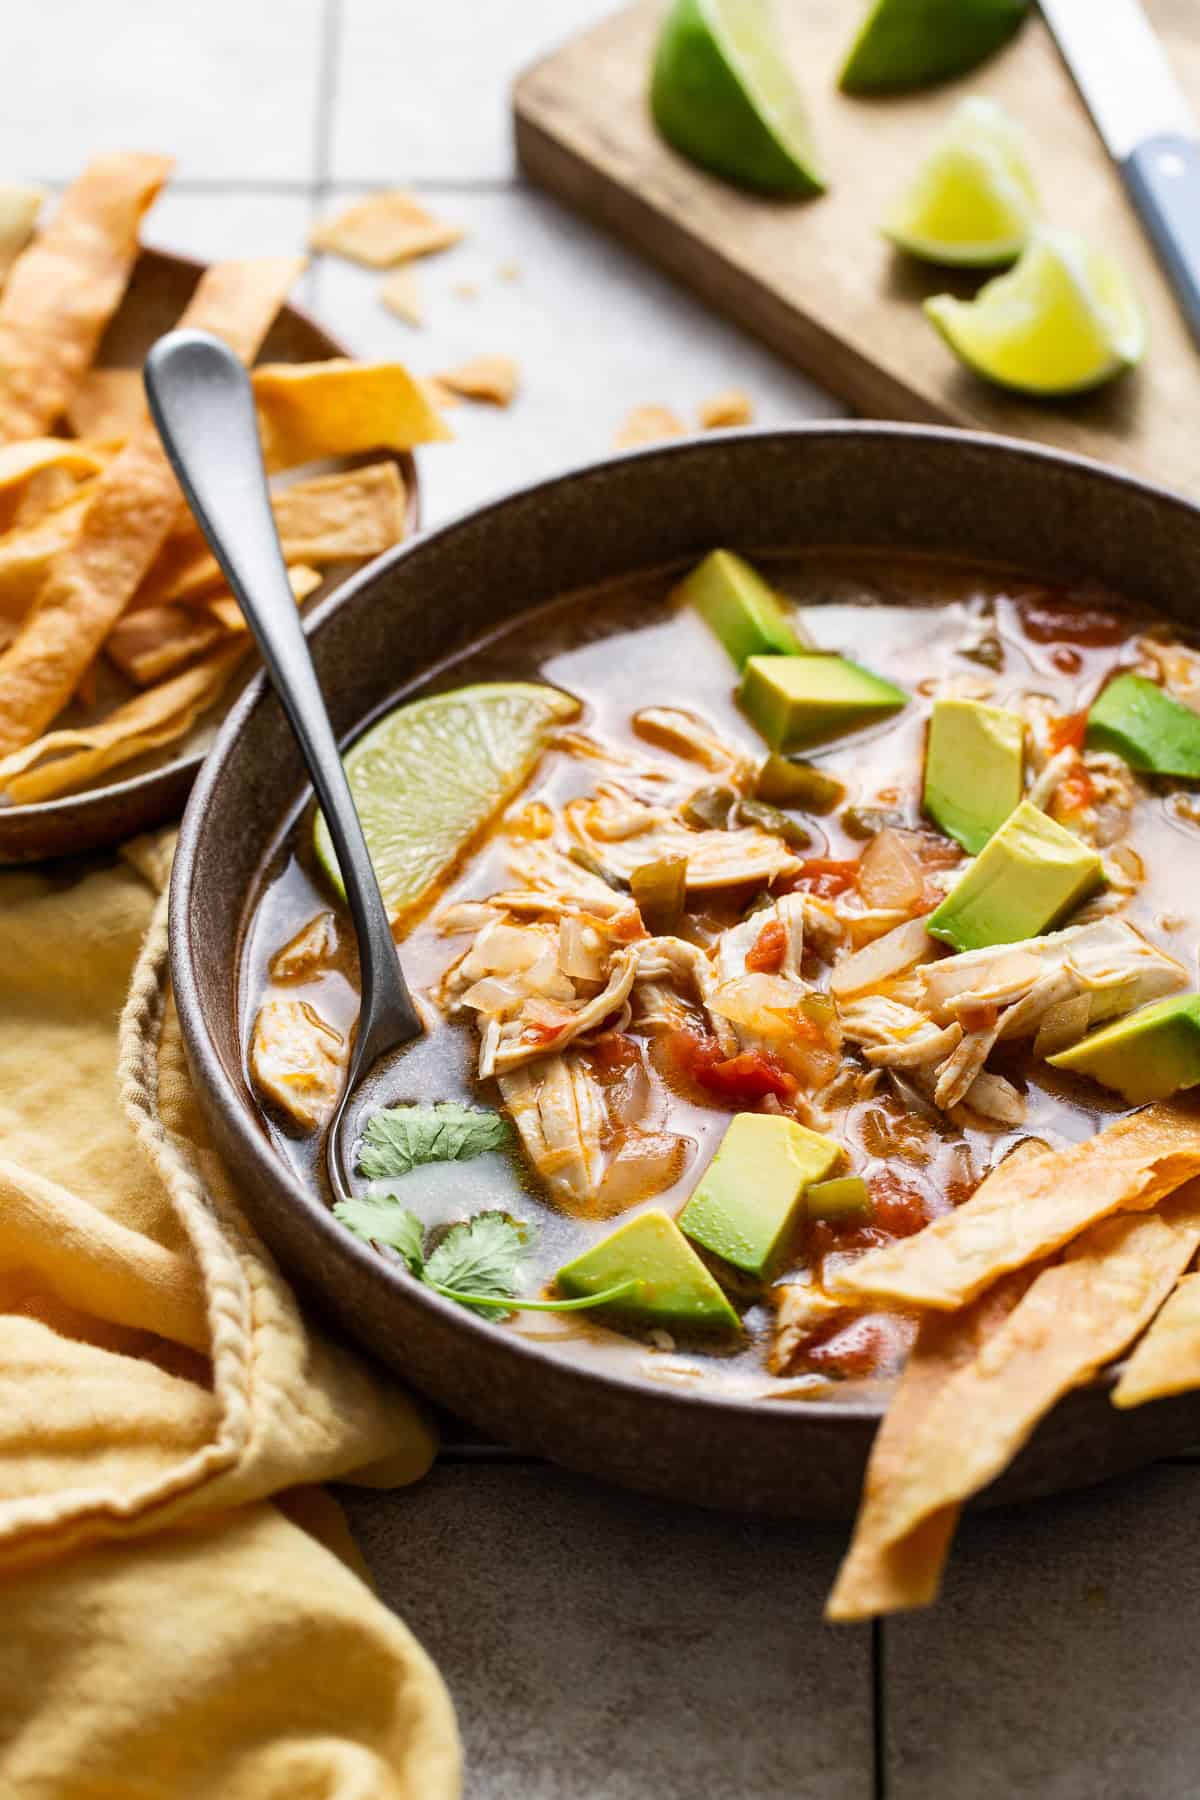 Sopa de lima served into bowls with tortillas trips, limes,, diced avocados 
 and cilantro. 